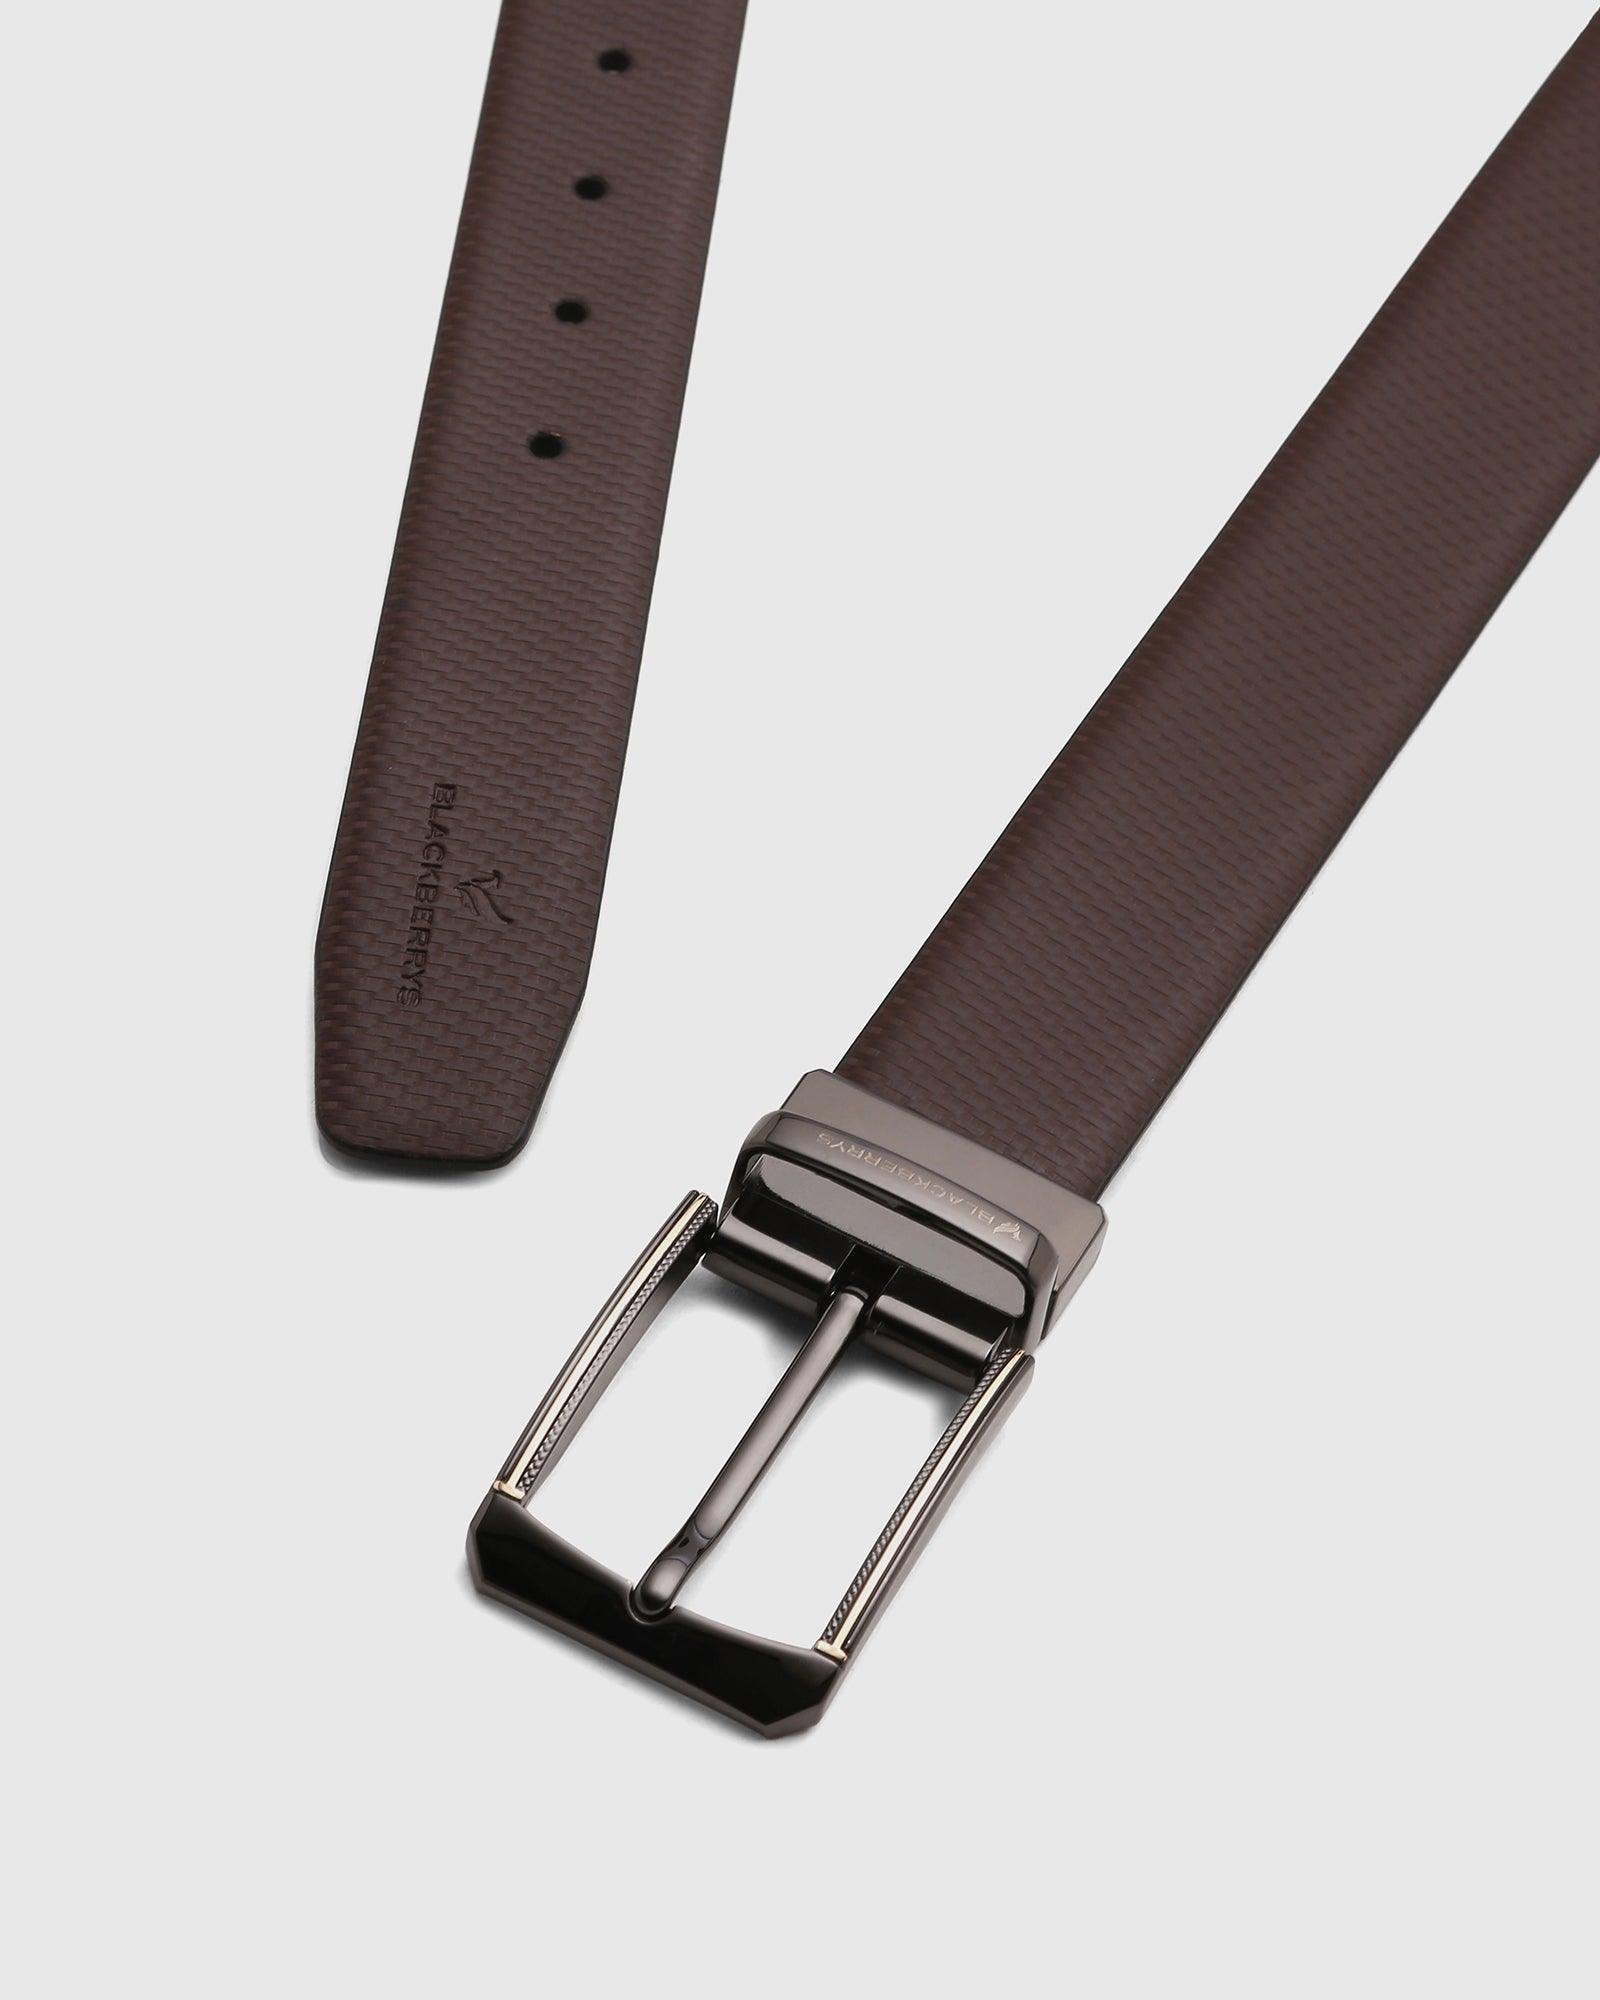 Leather Reversible Brown Tan Solid Belt - Seko